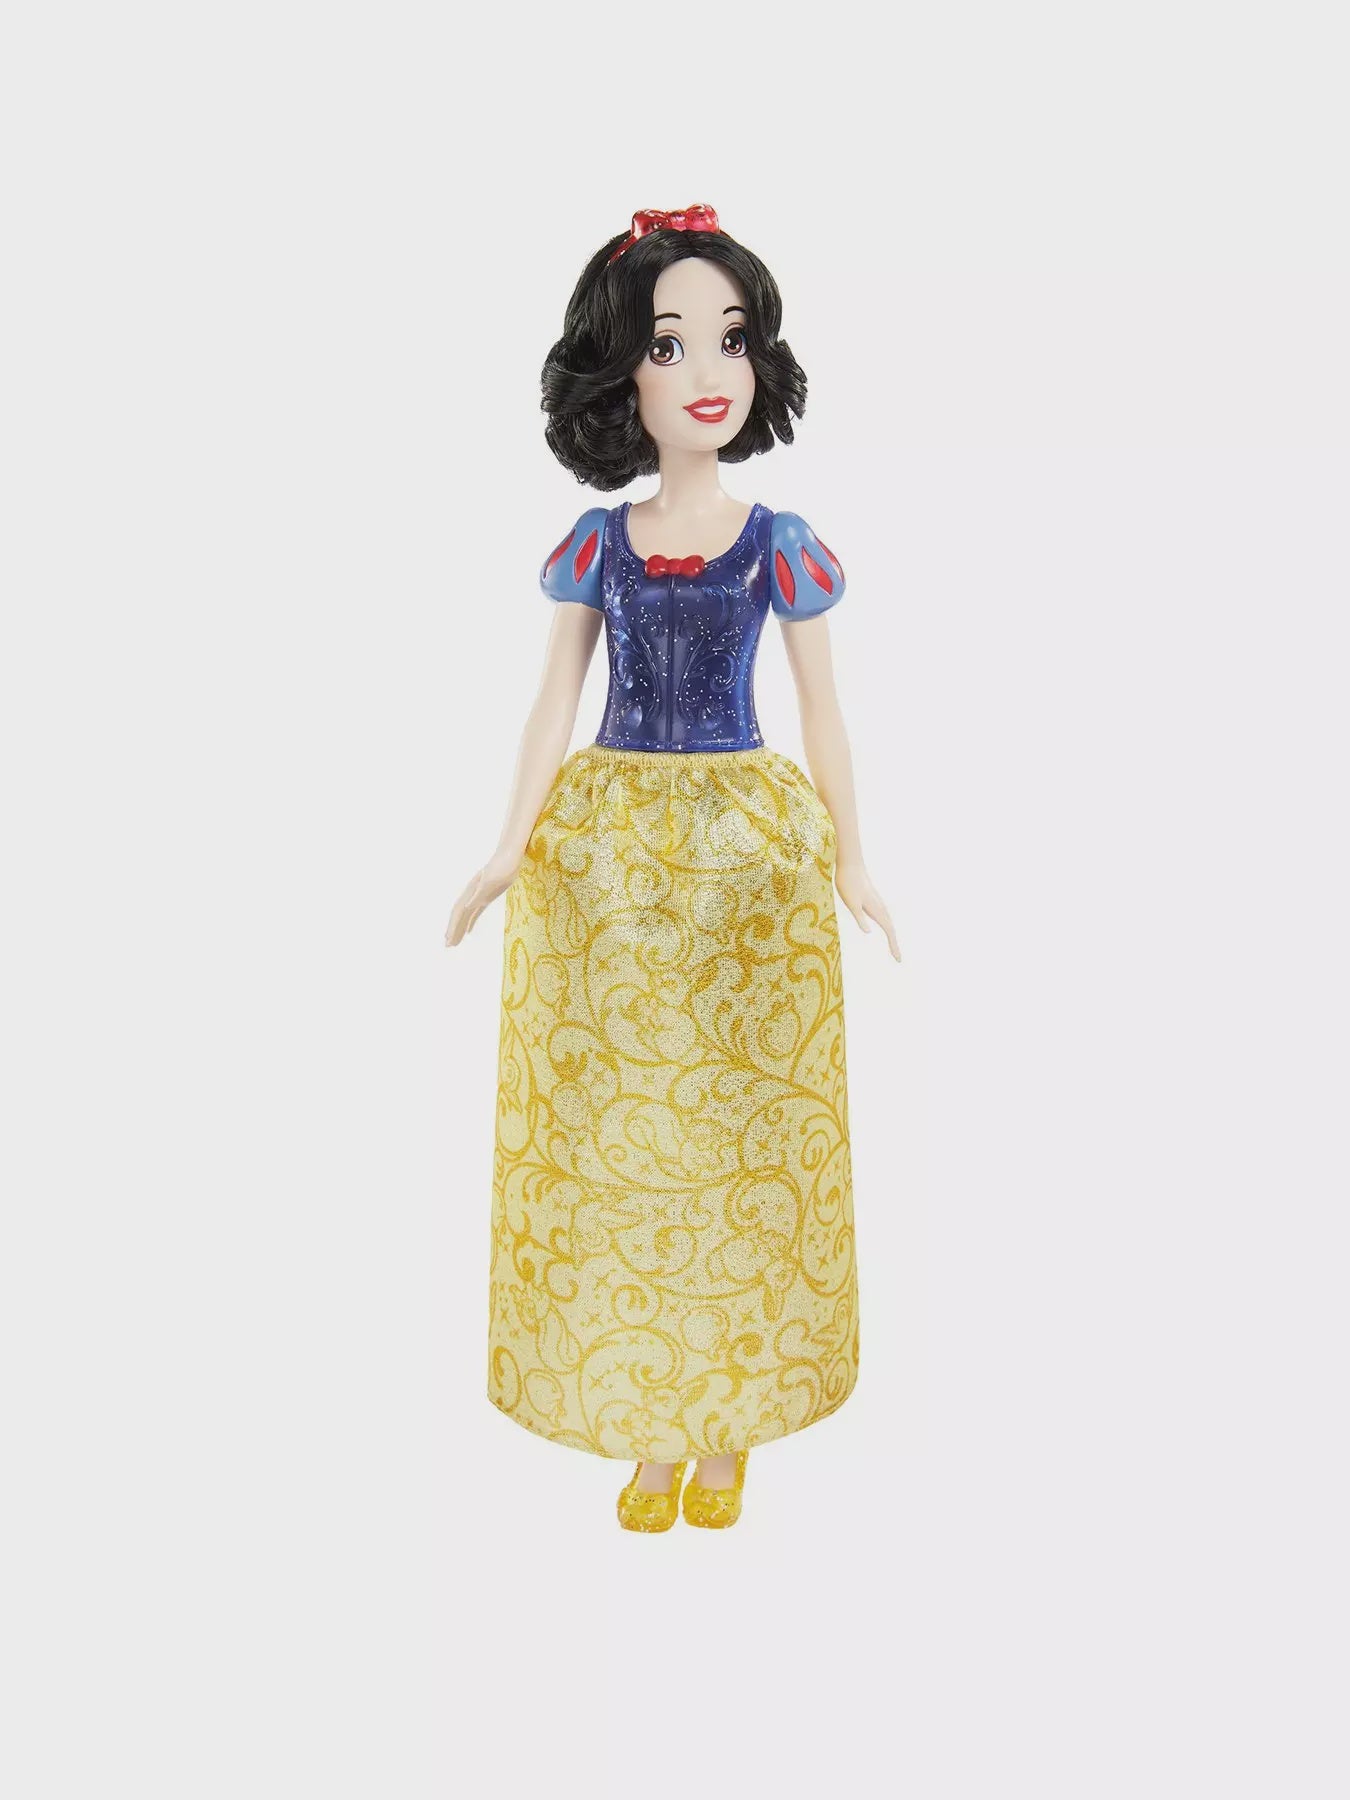 Disney Princess Doll Snow White HLW08